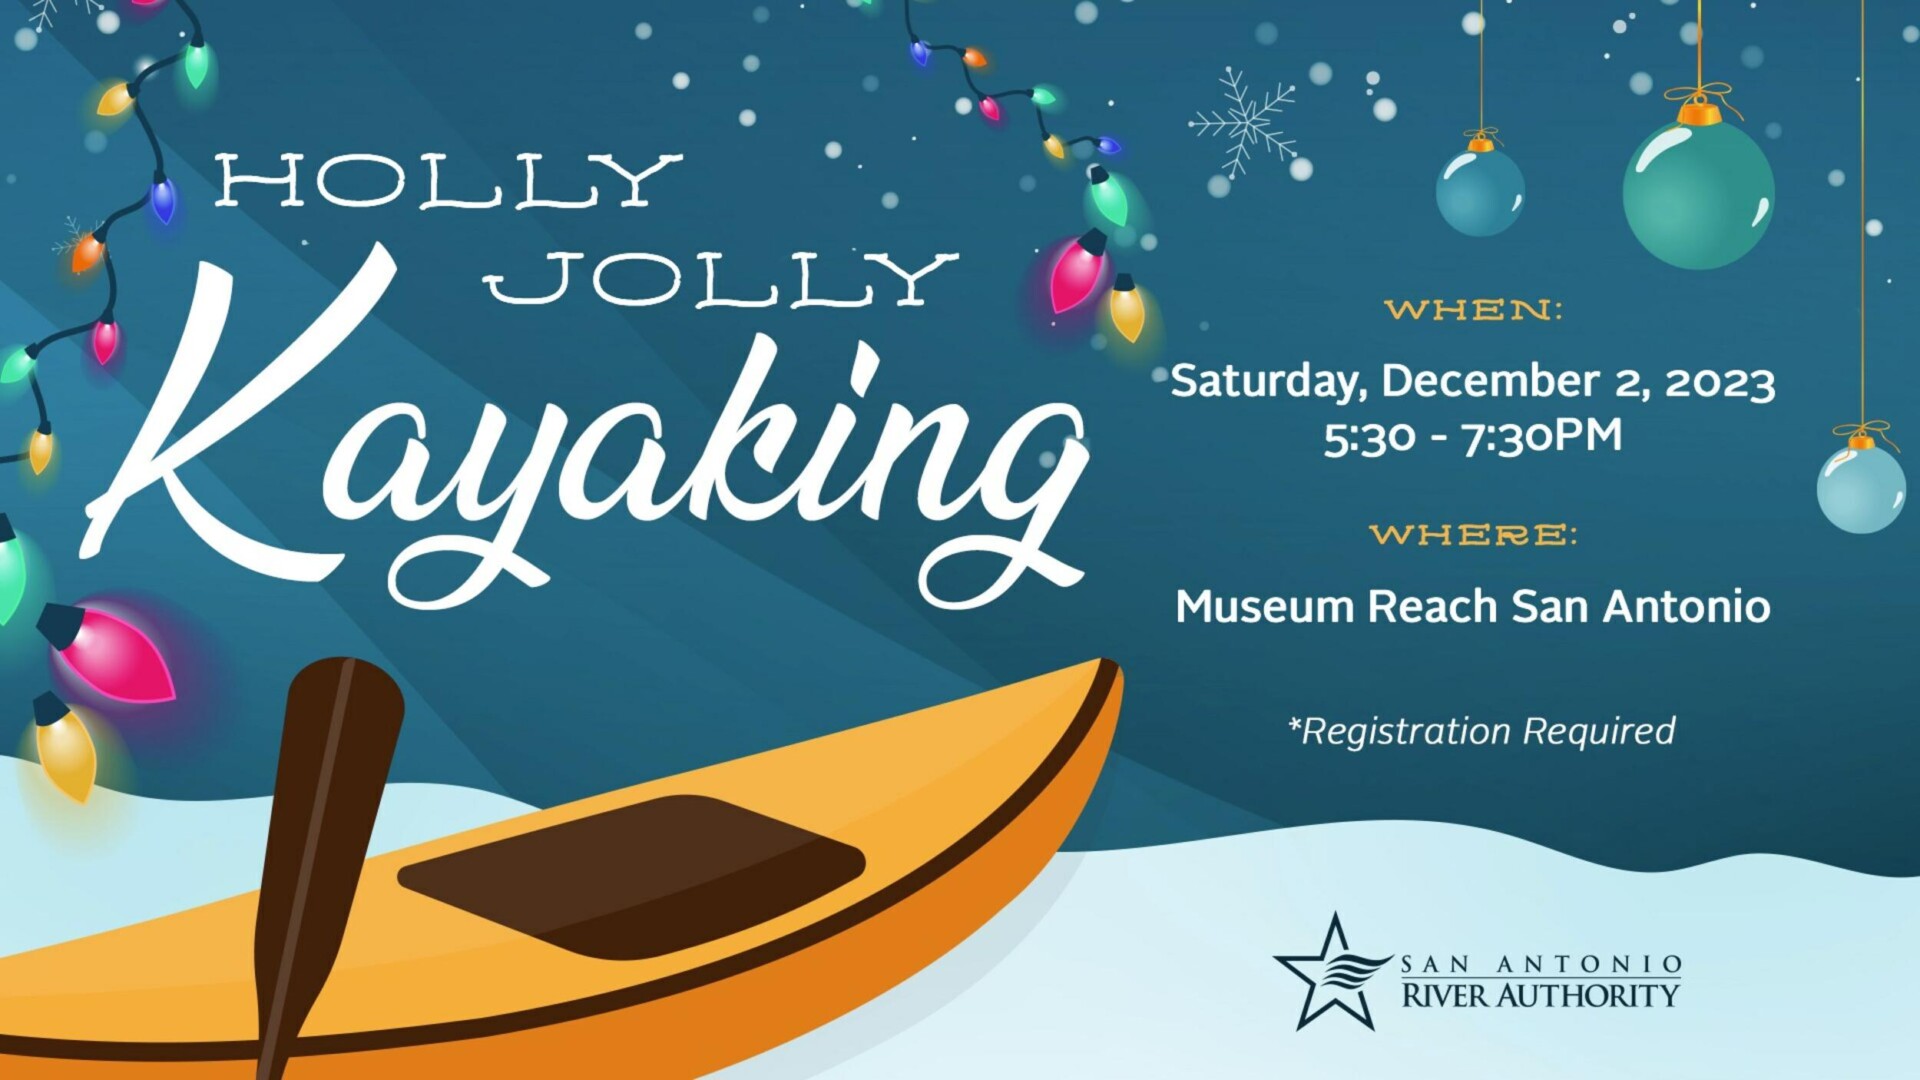 Holly Jolly Kayaking promotional image